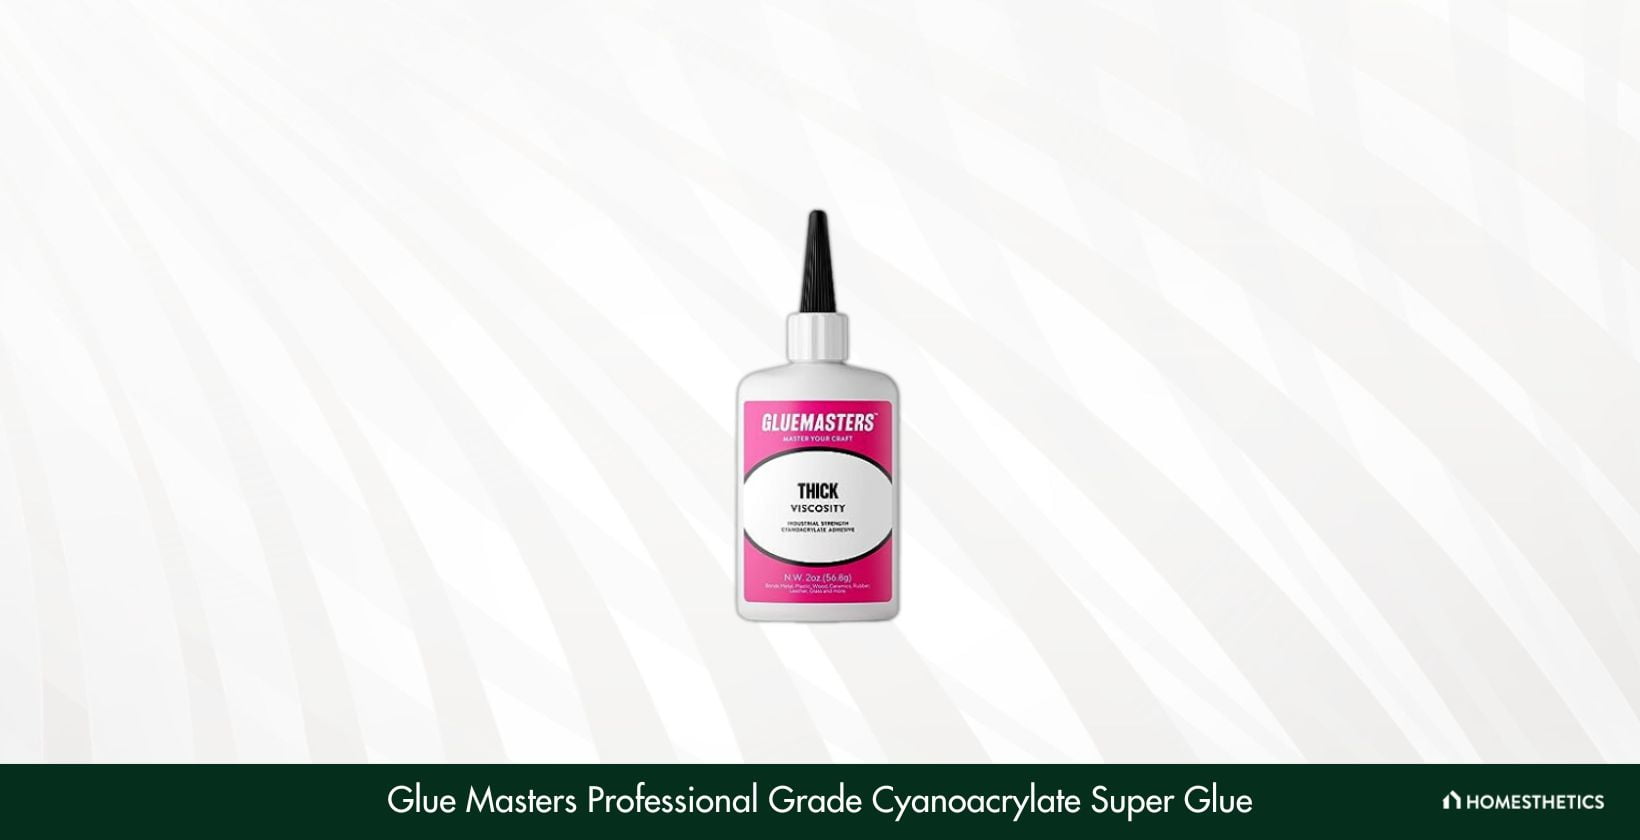 Glue Masters Professional Grade Cyanoacrylate Super Glue